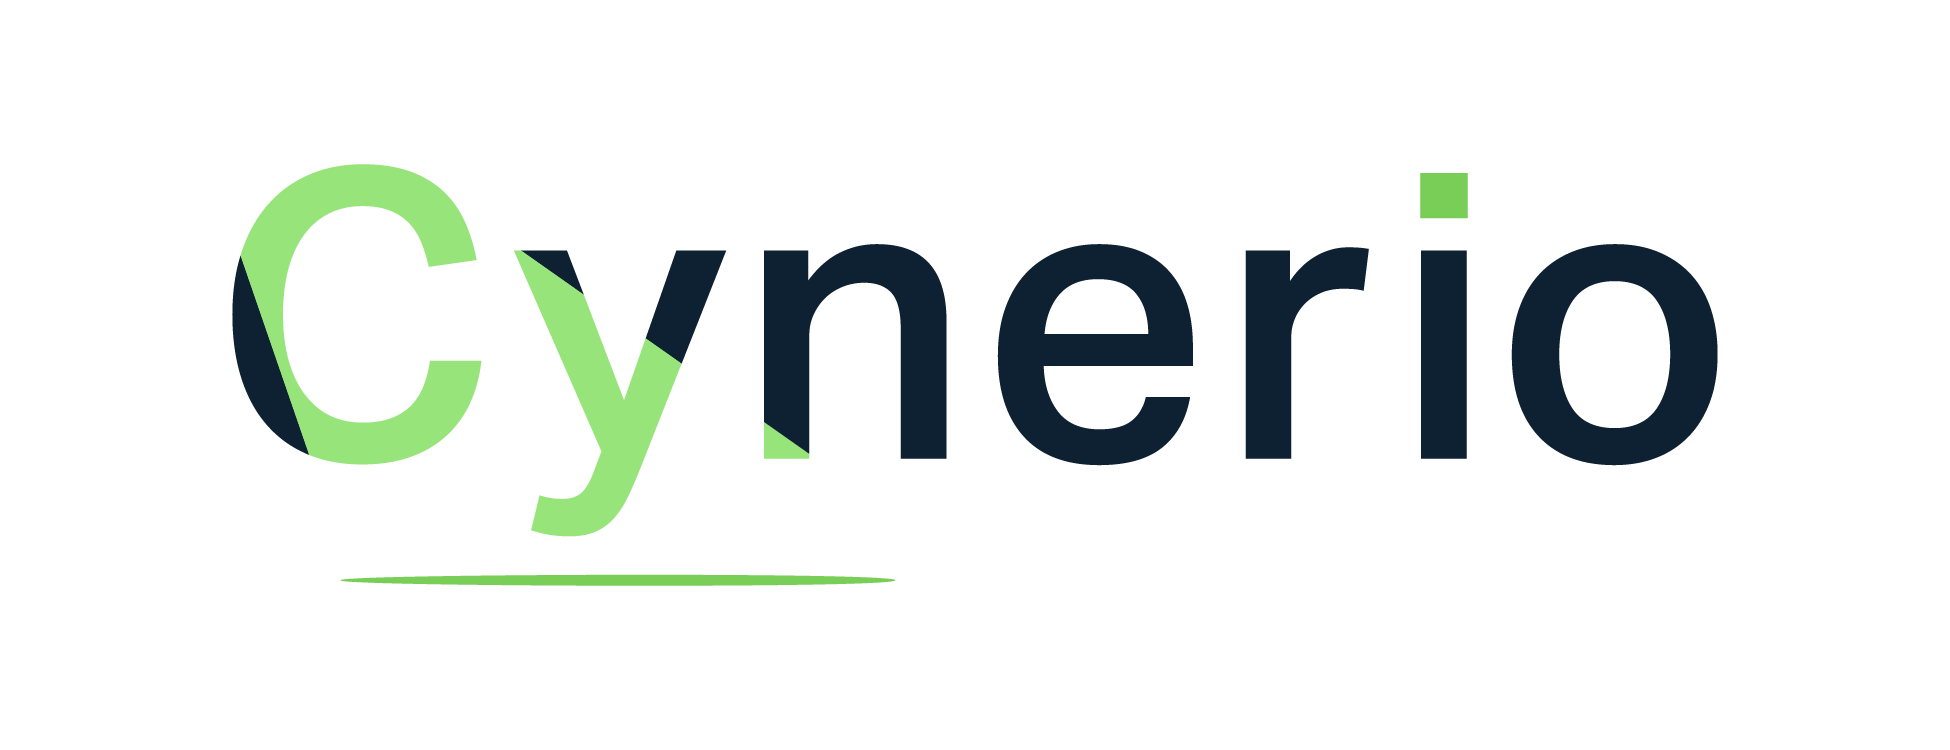 Cynerio Logo Main@3x copy.png